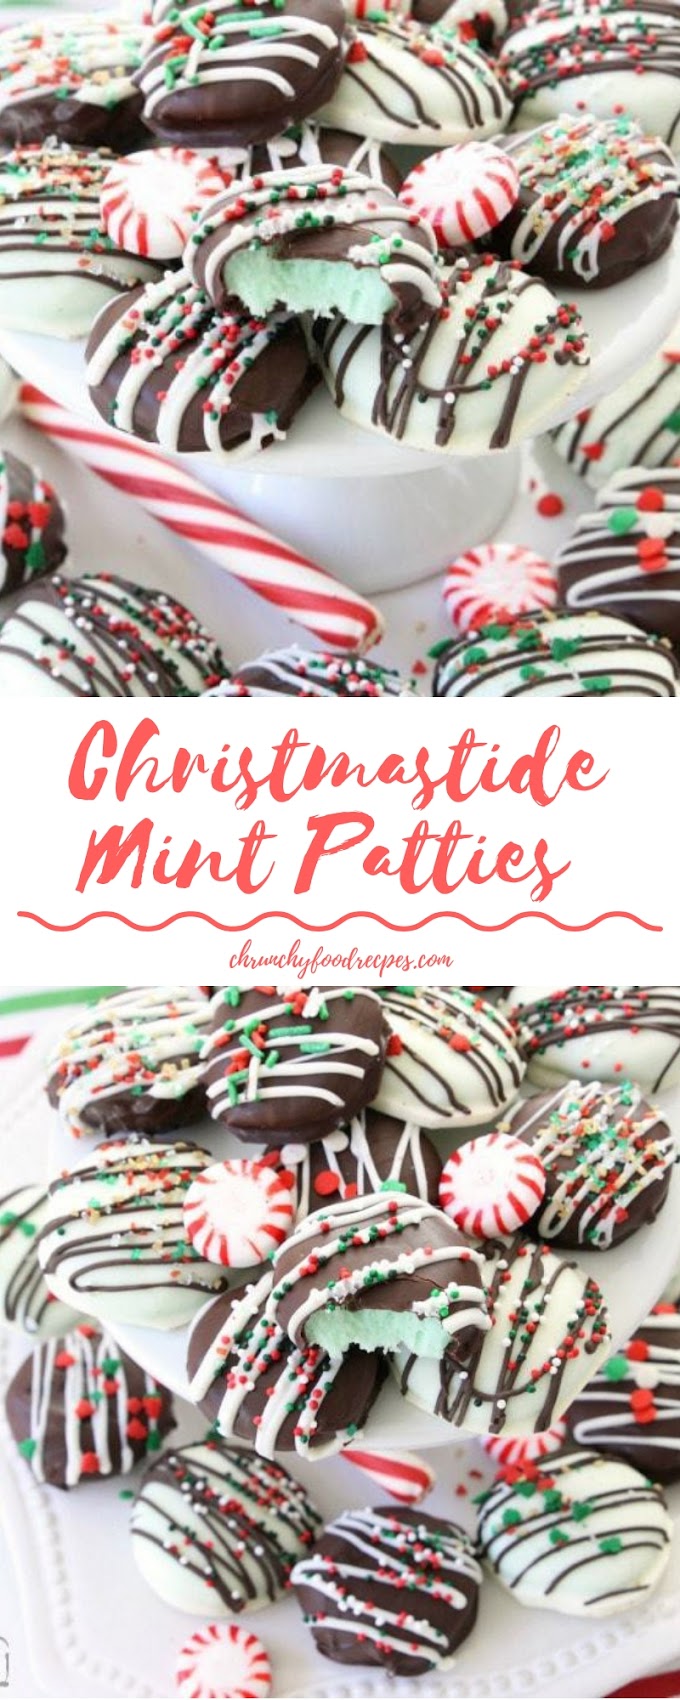  Christmastide Mint Patties #christmas #cookies